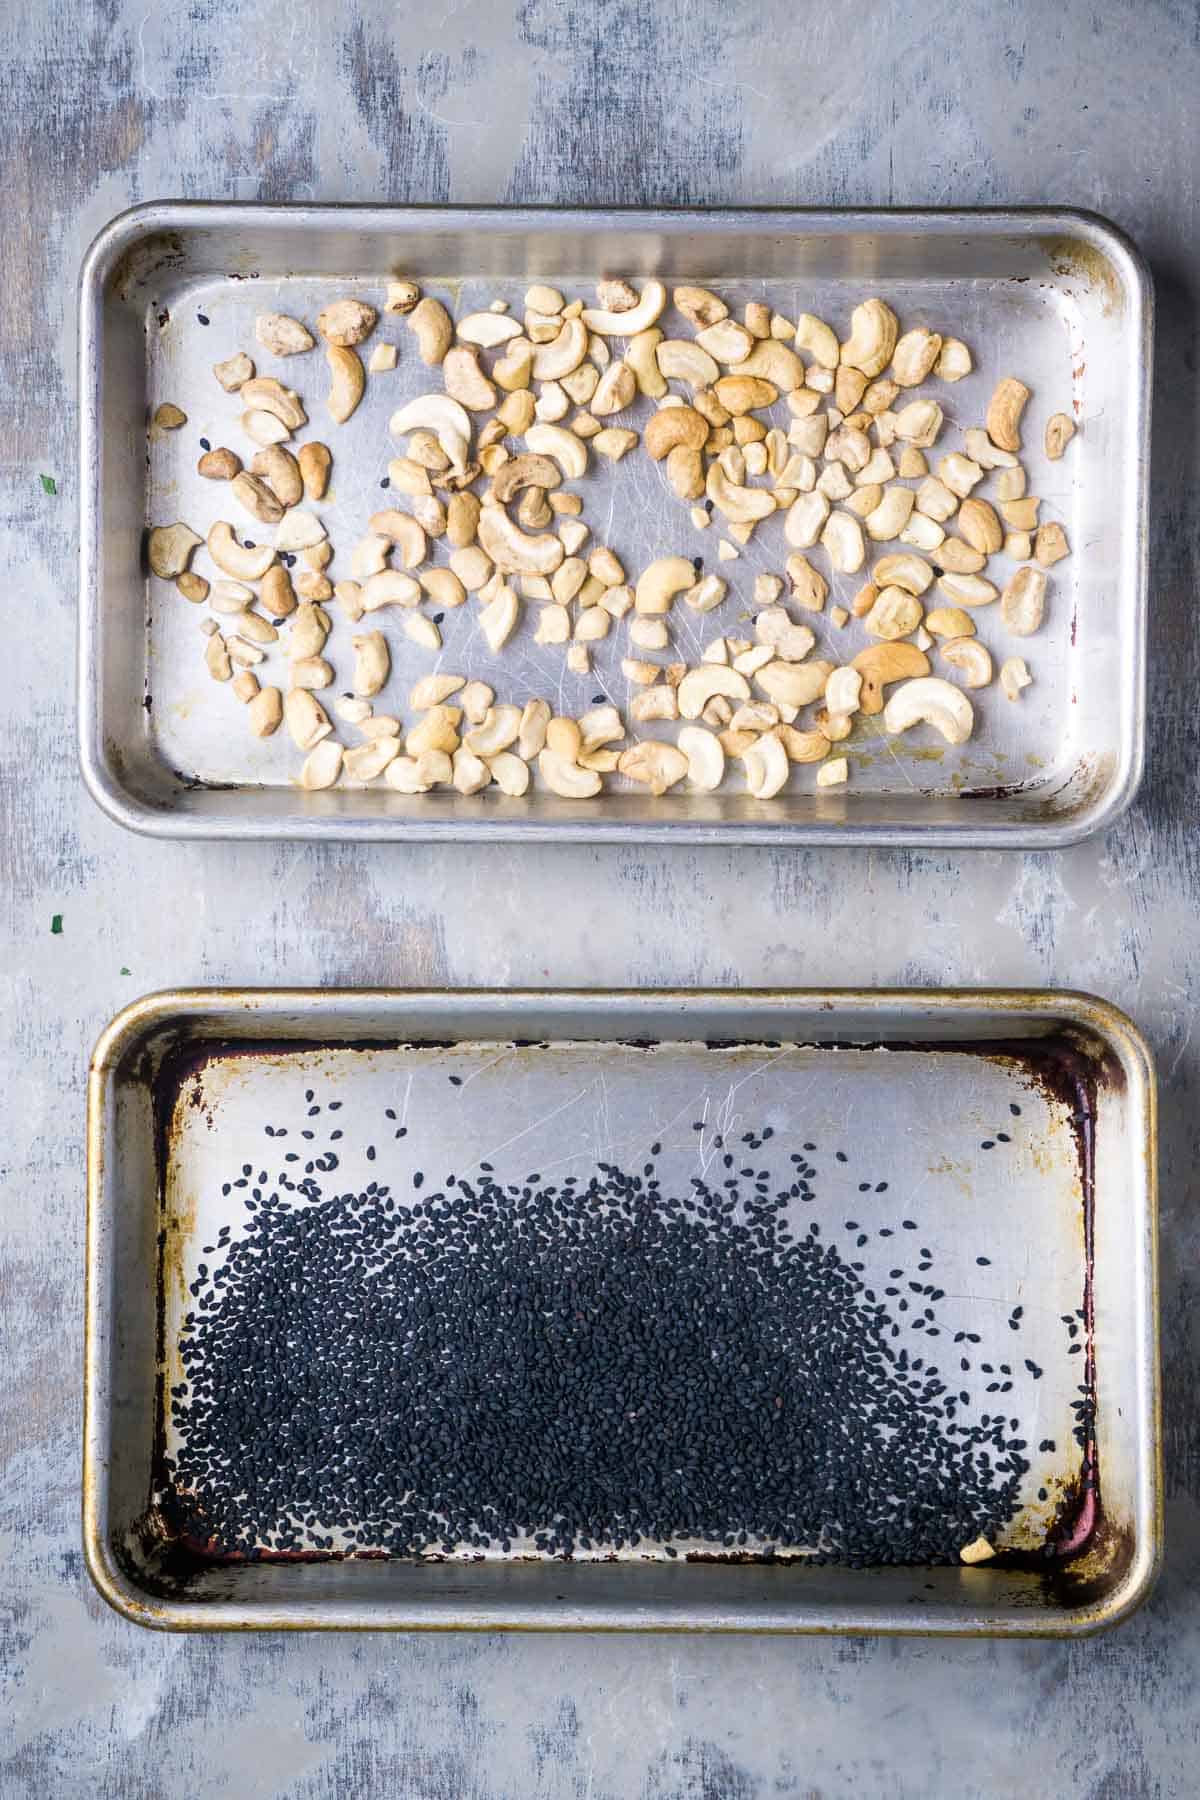 baking sheet with toasted cashews next to baking sheet with toasted black sesame seeds